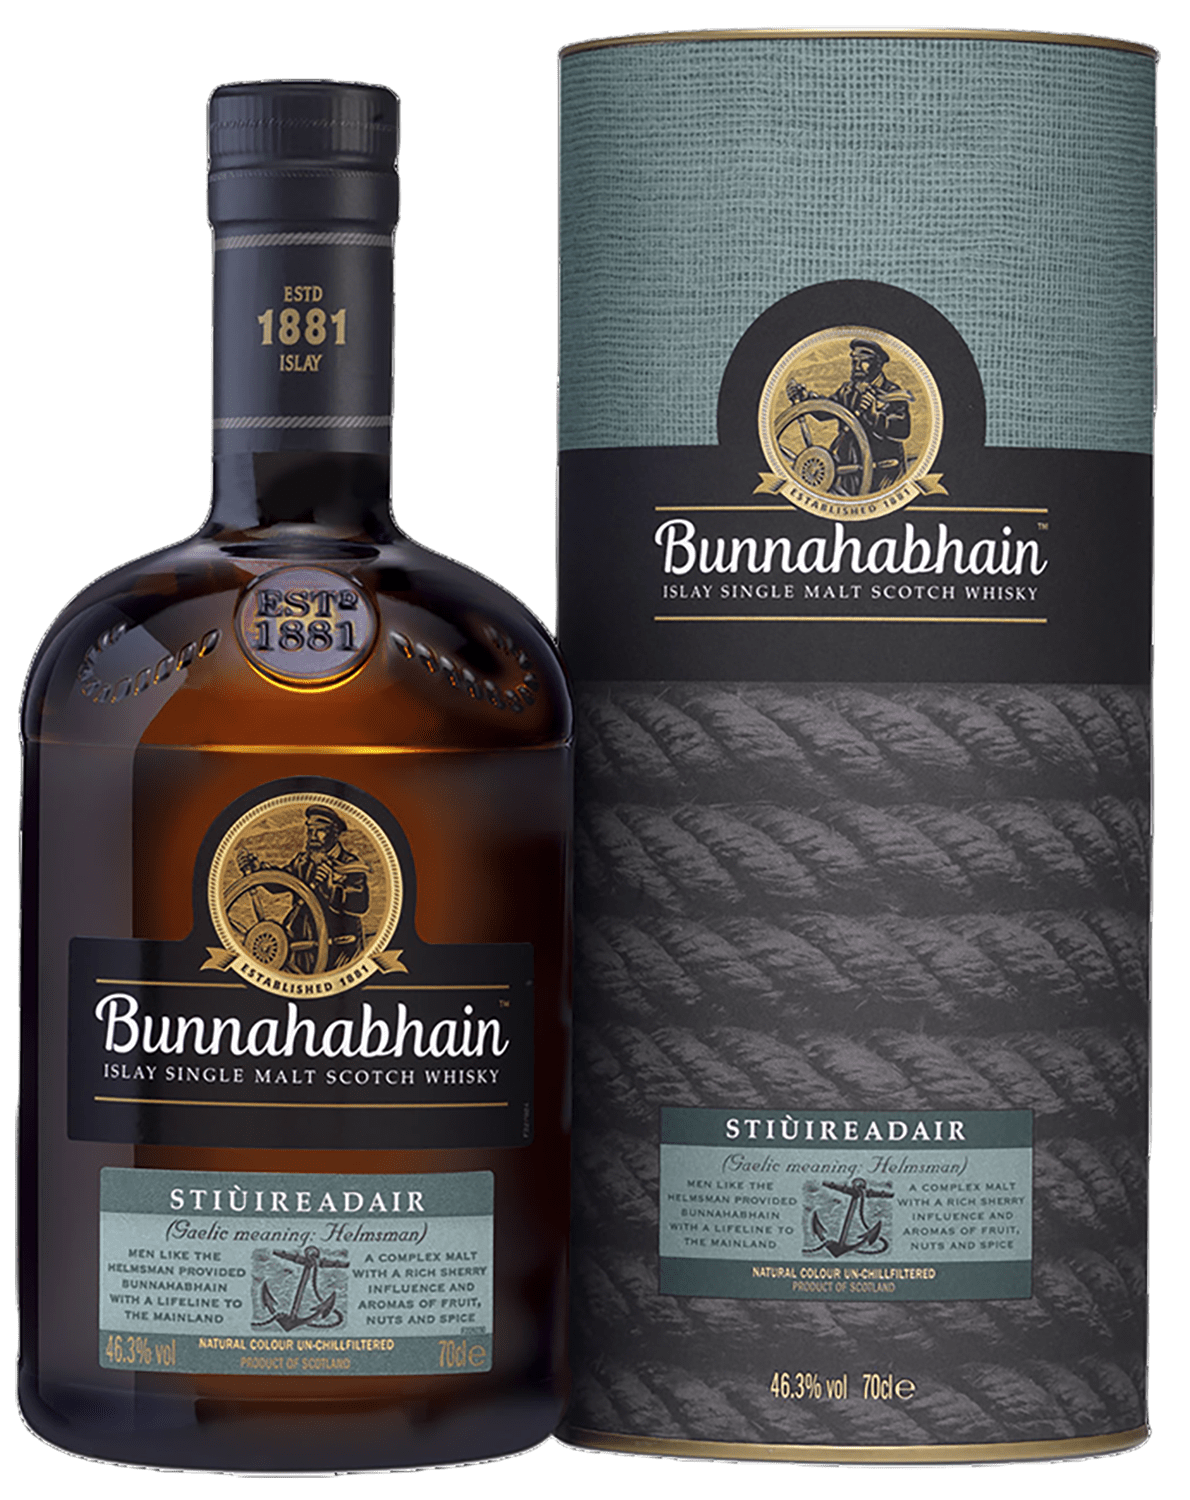 Bunnahabhain Stiuireadair Islay Single Malt Scotch Whisky (gift box) bowmore 15 y o islay single malt scotch whisky gift box